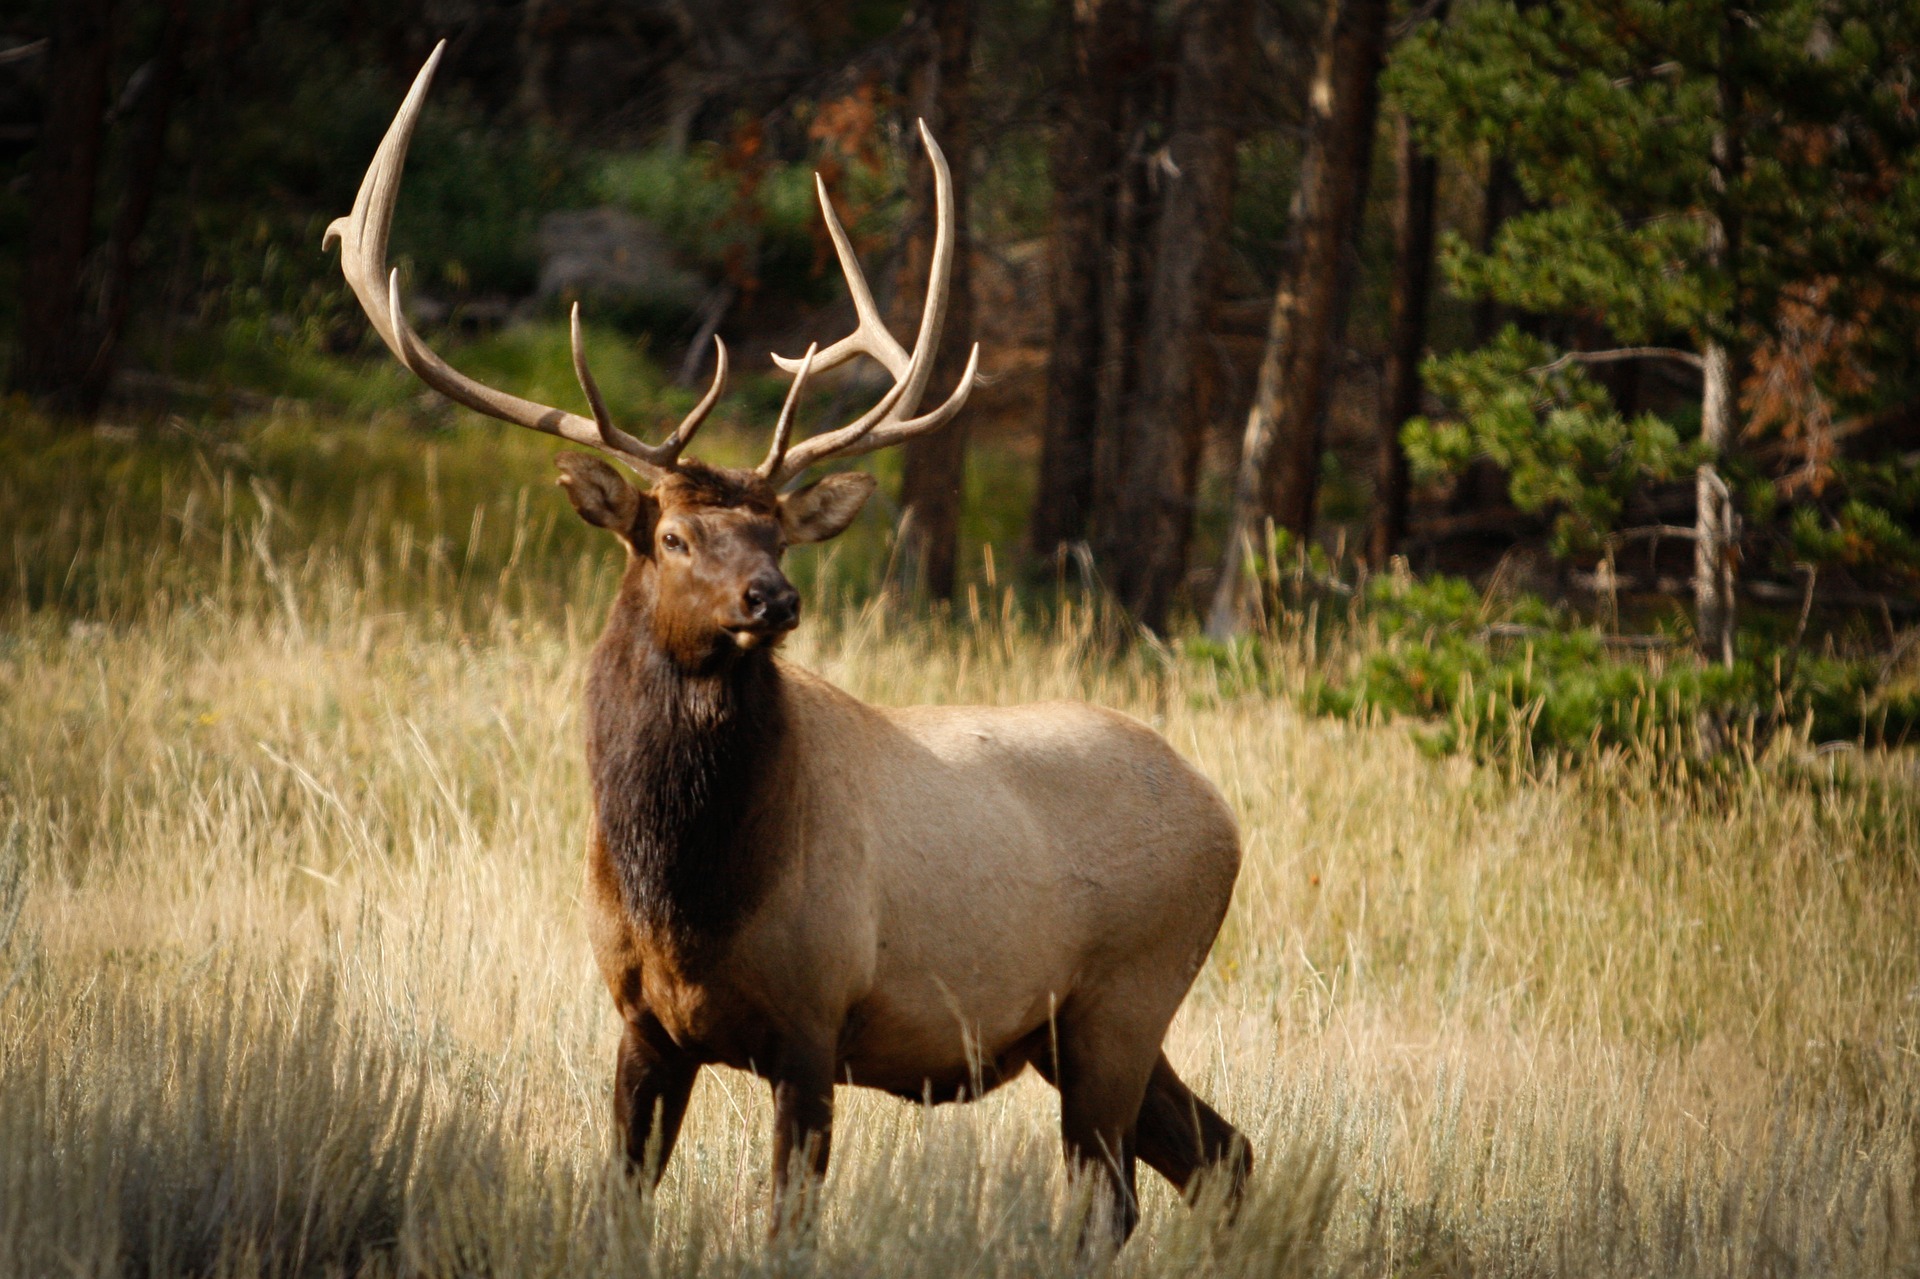 Practice will make you a better elk shot.